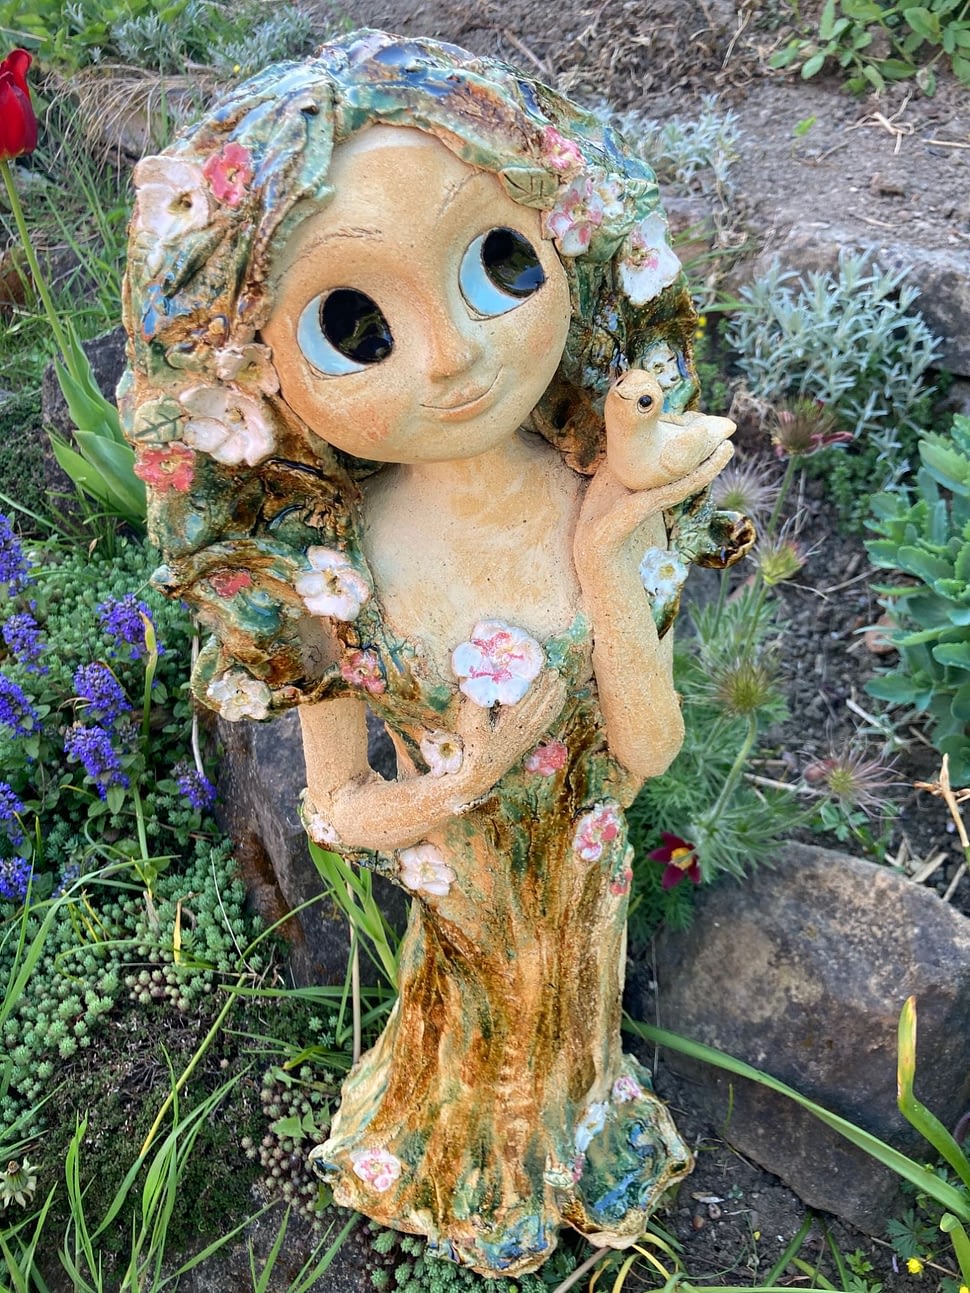 víla socha dekorace do zahrady keramika figura keramikaandee květiny